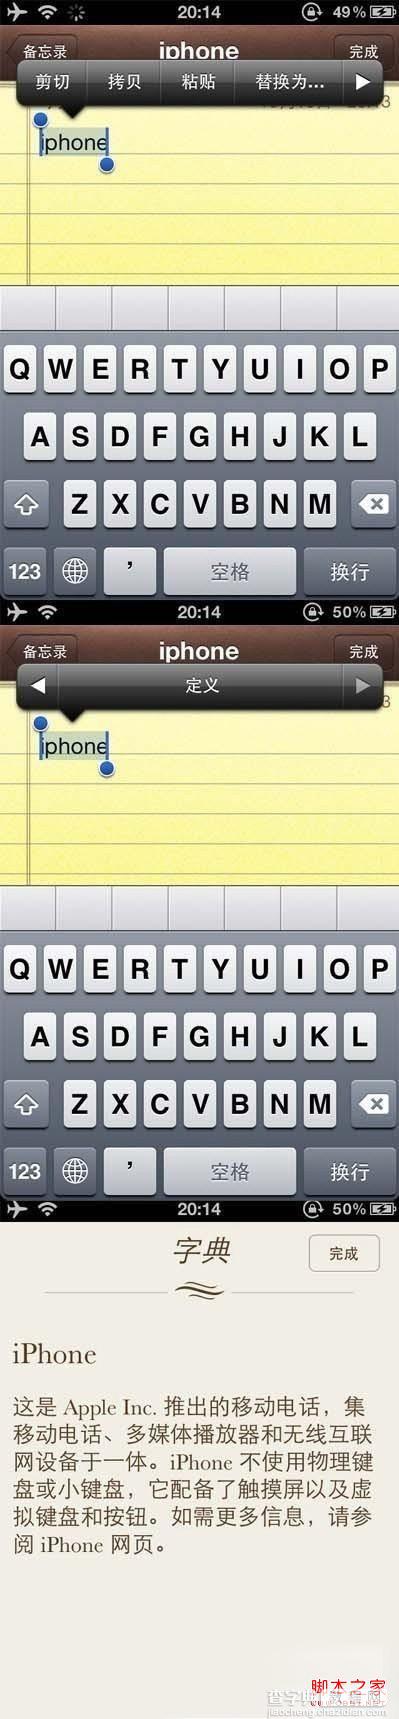 iphone4s字典功能使用图文教程1